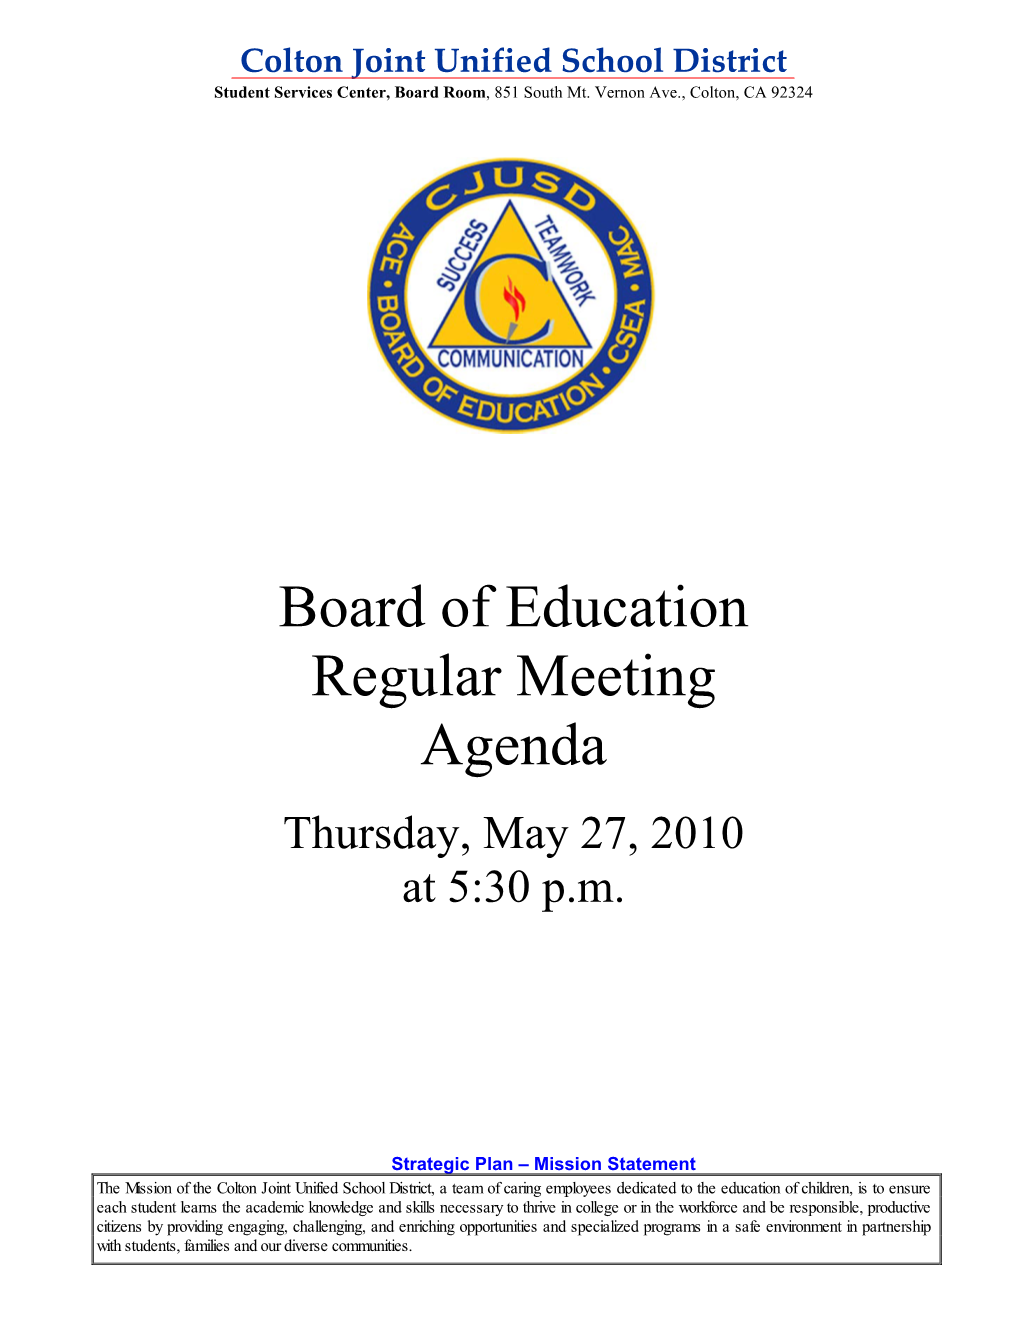 Board of Education Regular Meeting Agenda